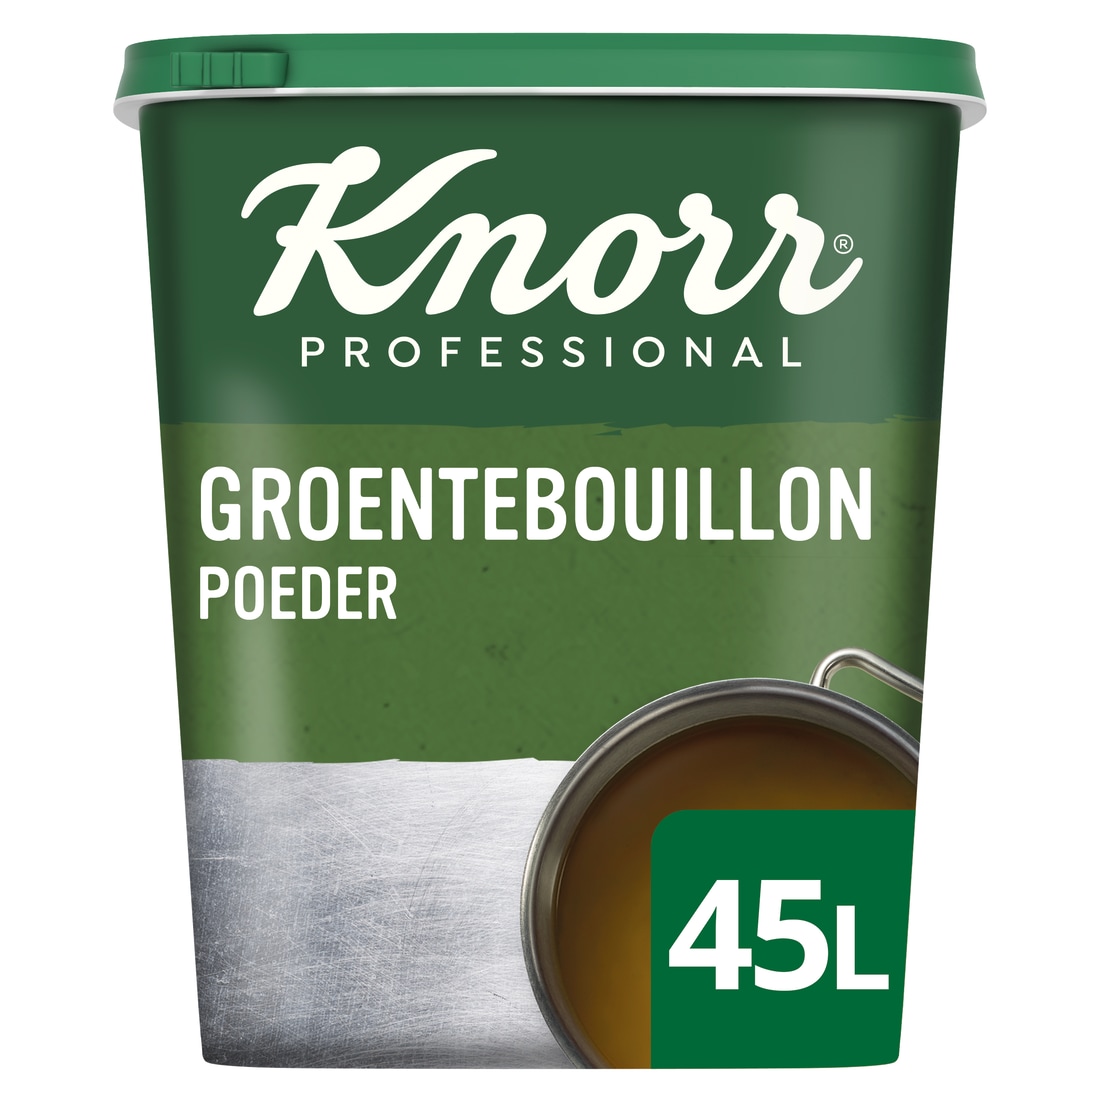 Knorr Professional Groentebouillon authentiek poeder opbrengst 45L - 